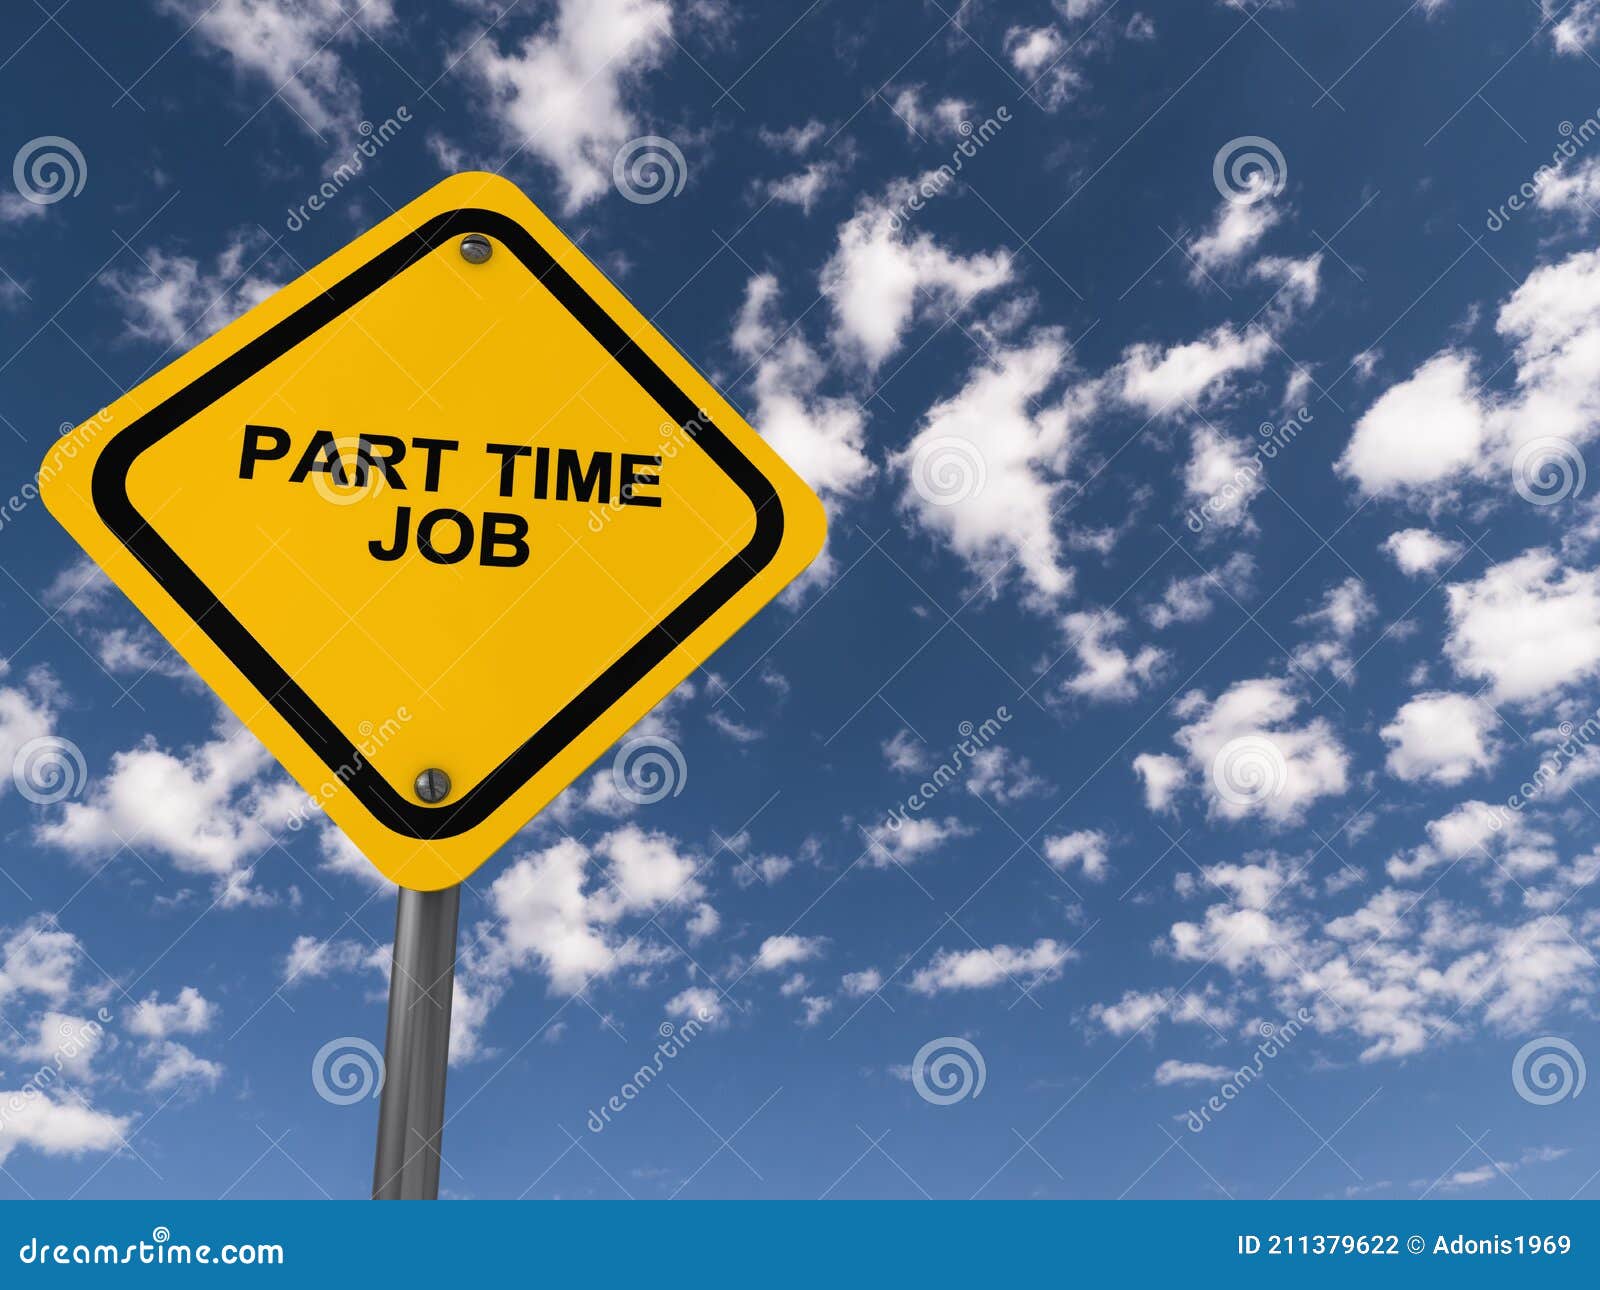 part time job traffic sign